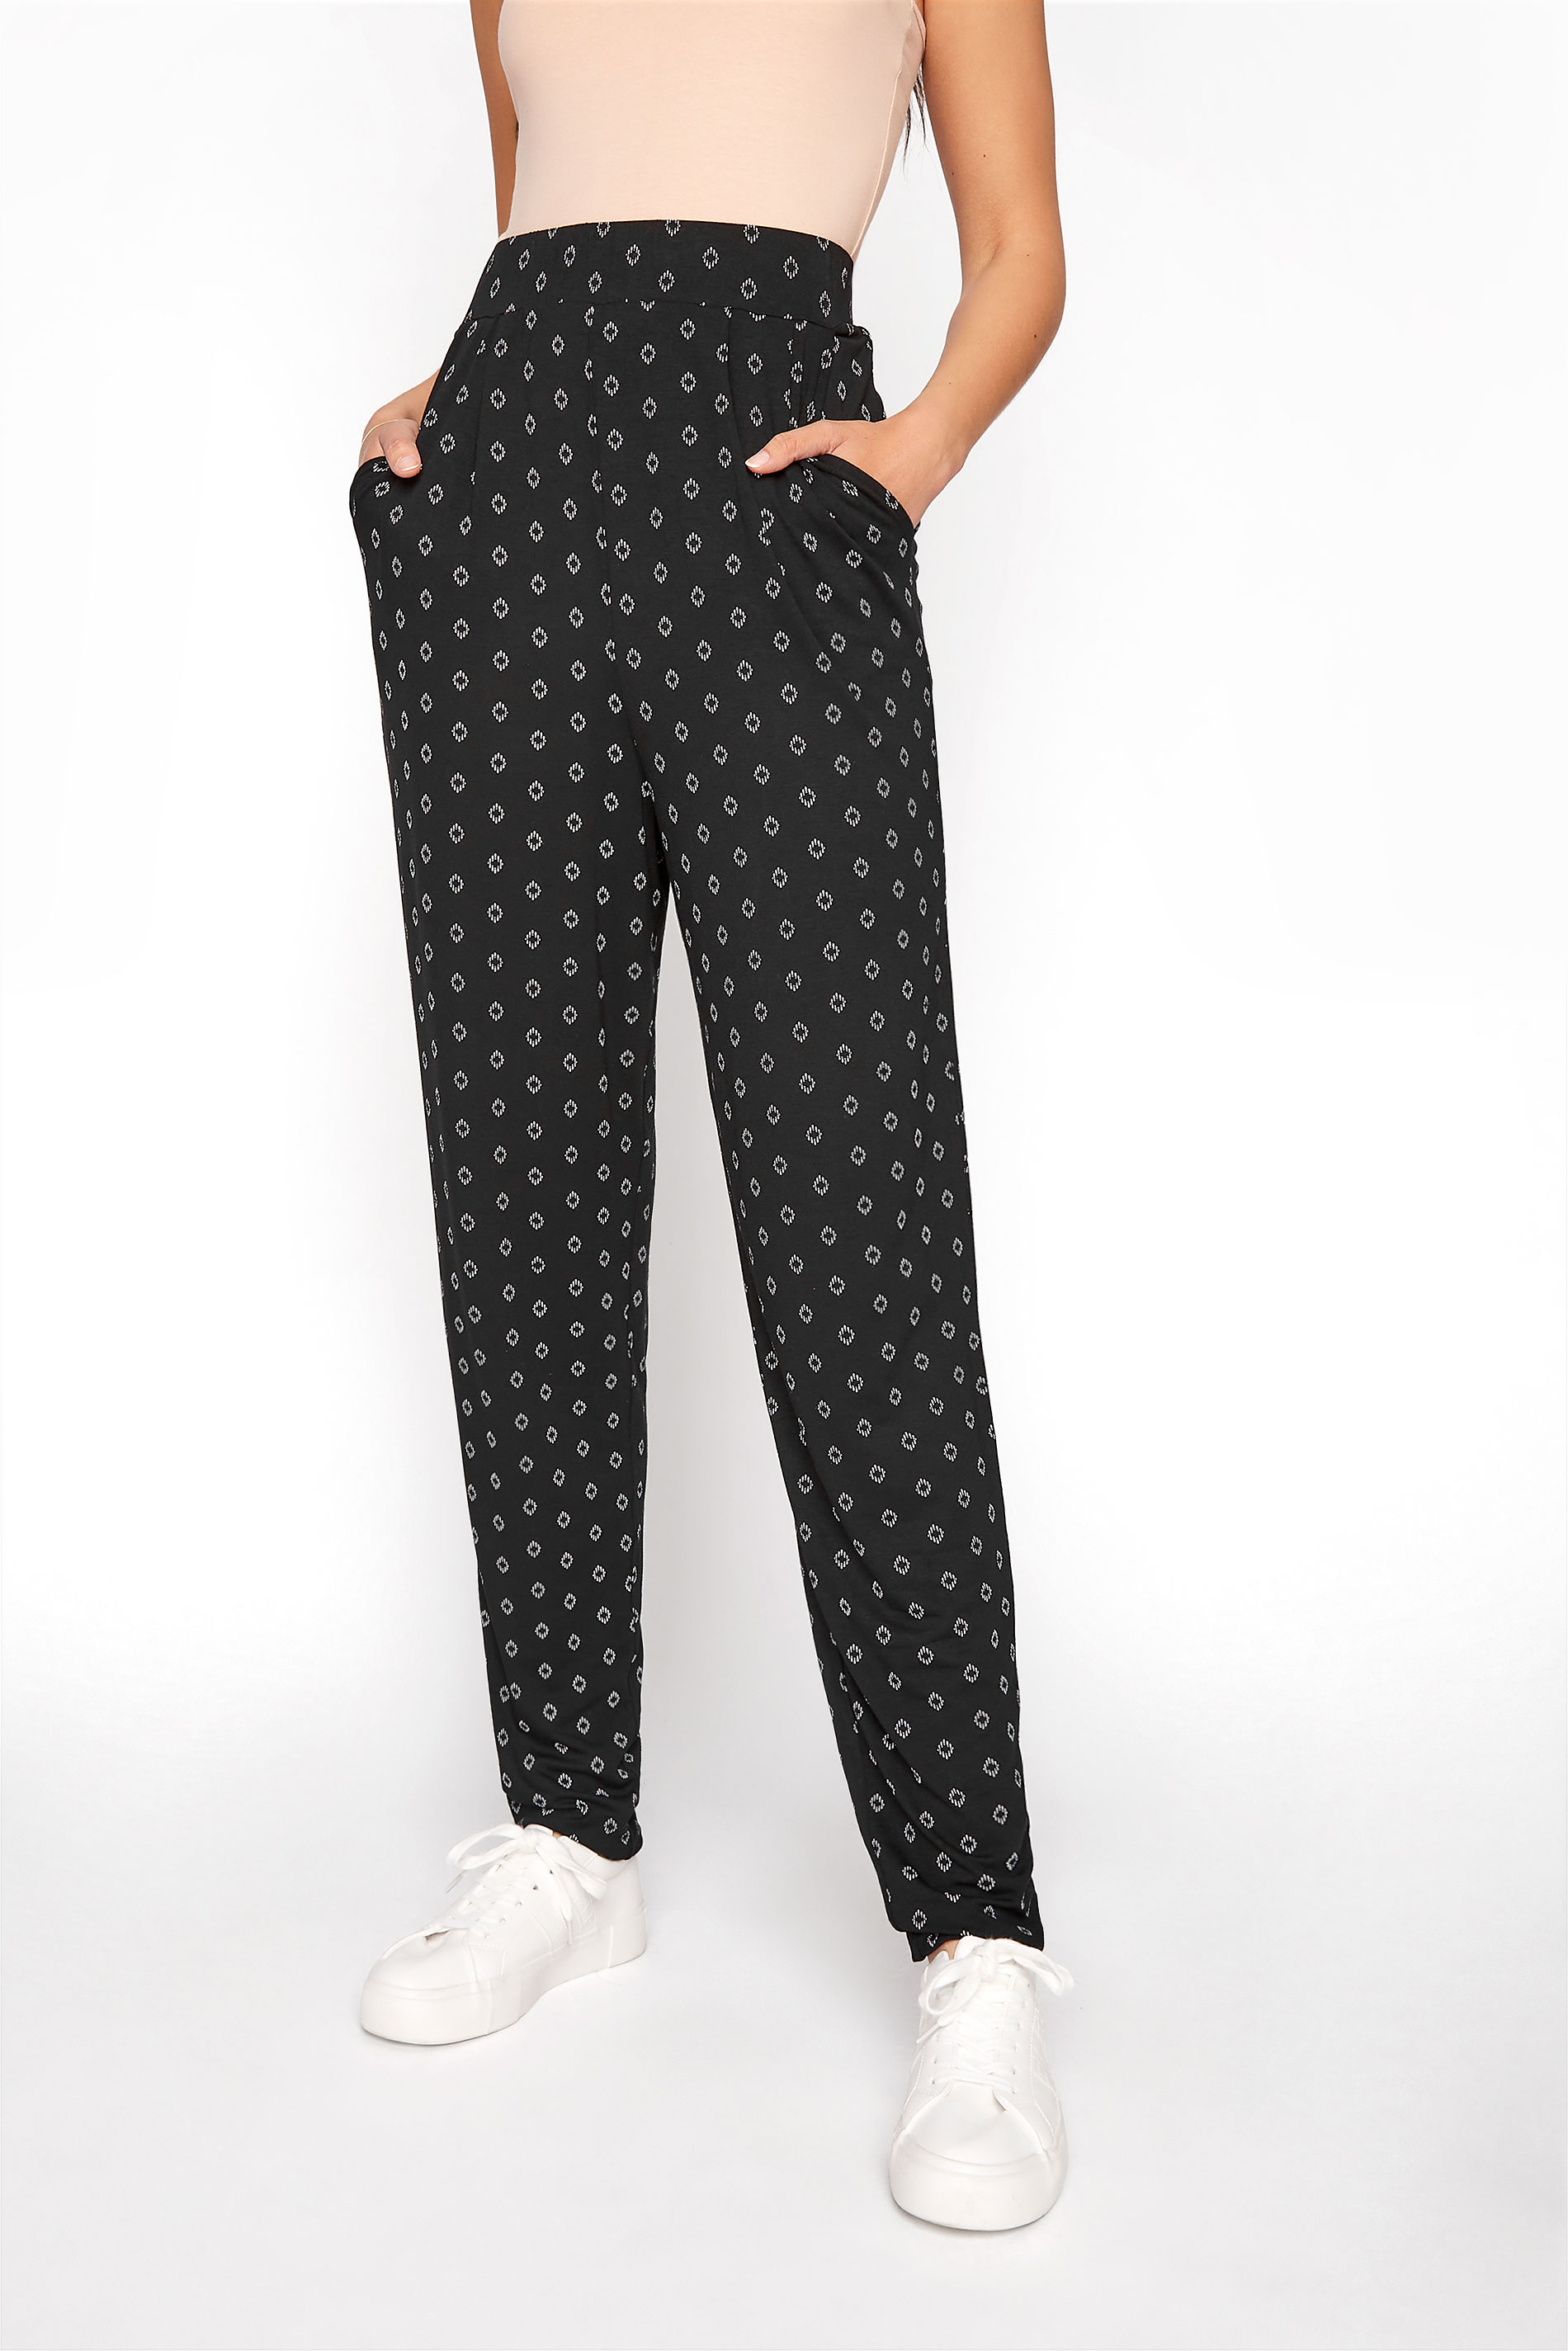 LTS Black Geometric Double Pleat Jersey Harem Trousers | Long Tall Sally